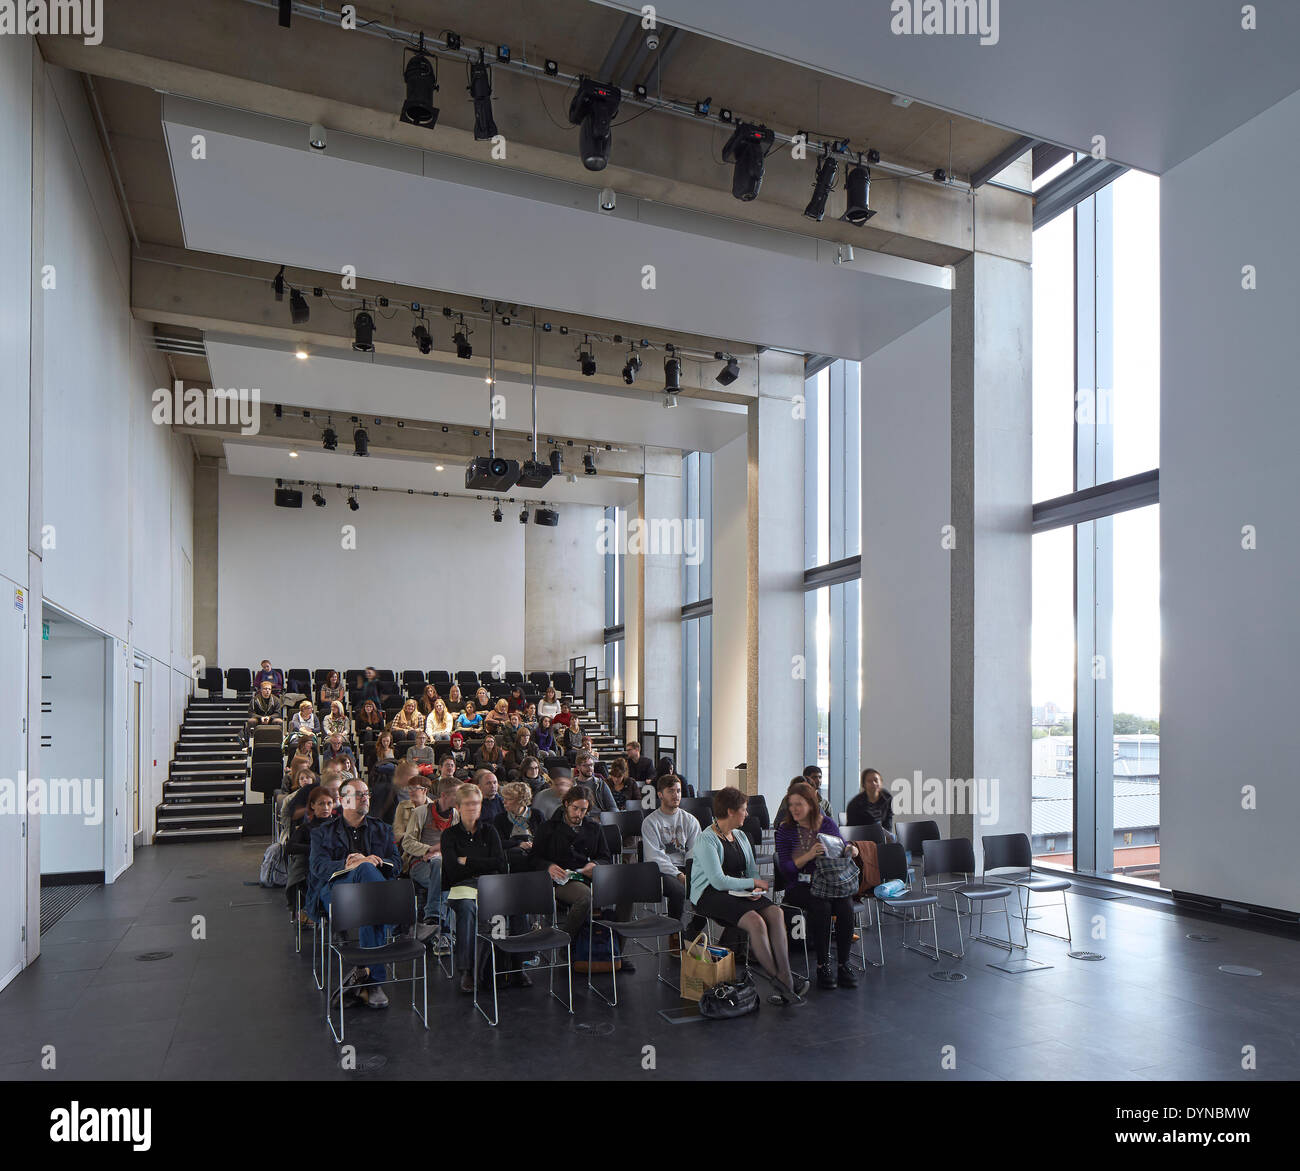 Manchester School of Art an der MMU, Manchester, Vereinigtes Königreich. Architekt: Feilden Clegg Bradley Studios LLP, 2014. Hörsaal. Stockfoto